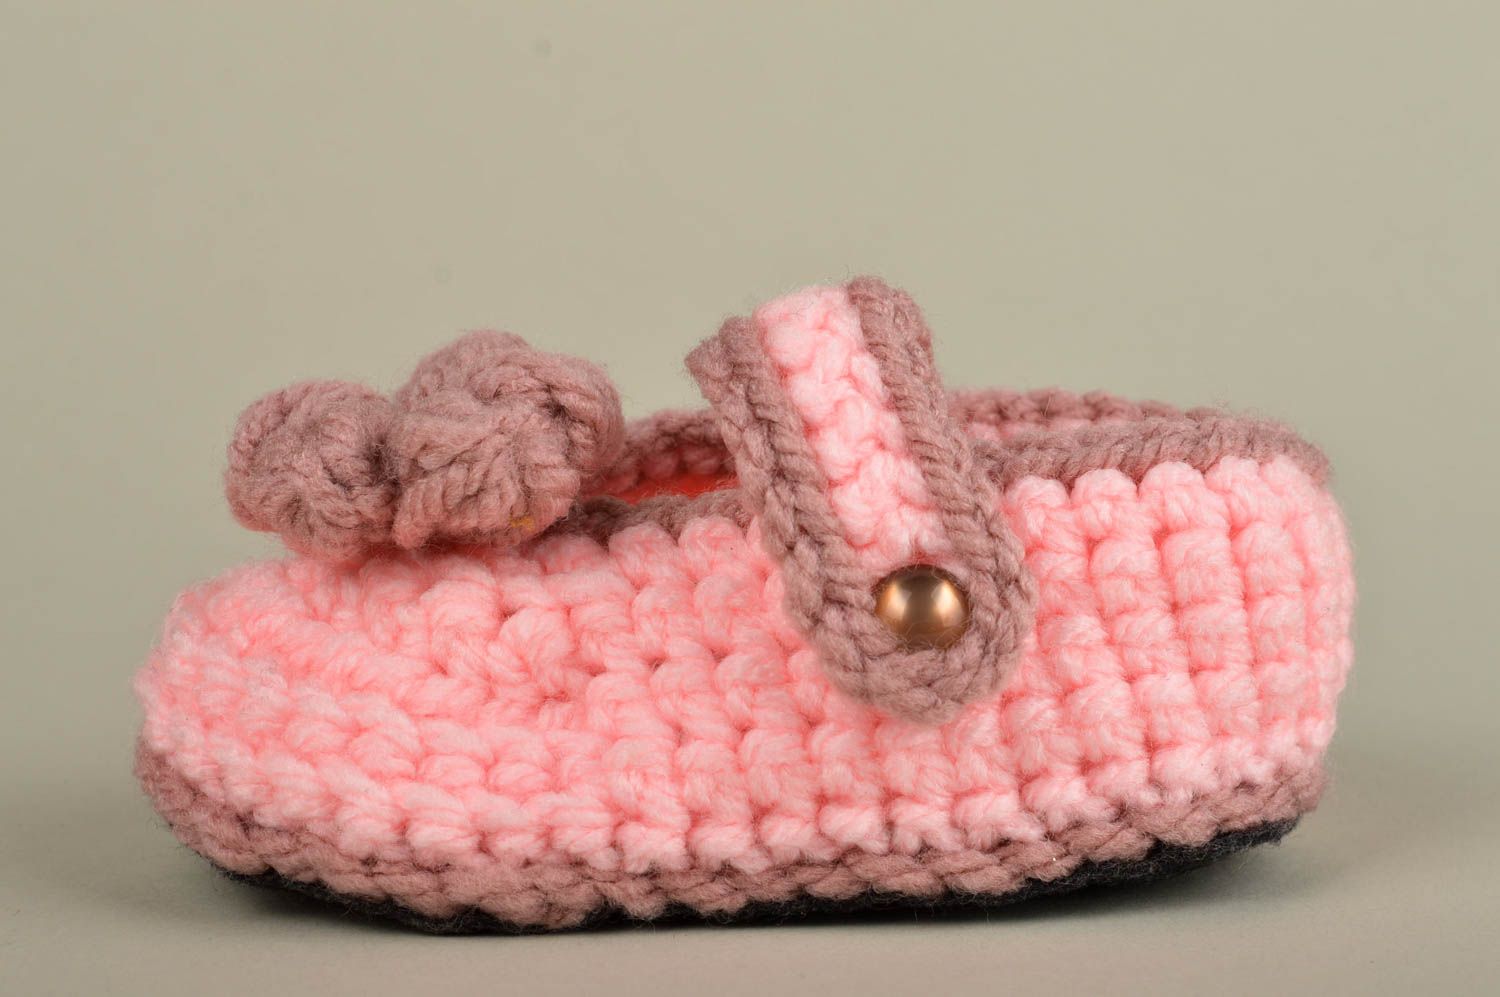 Hand-crocheted baby booties for newborn children handmade socks for children photo 3